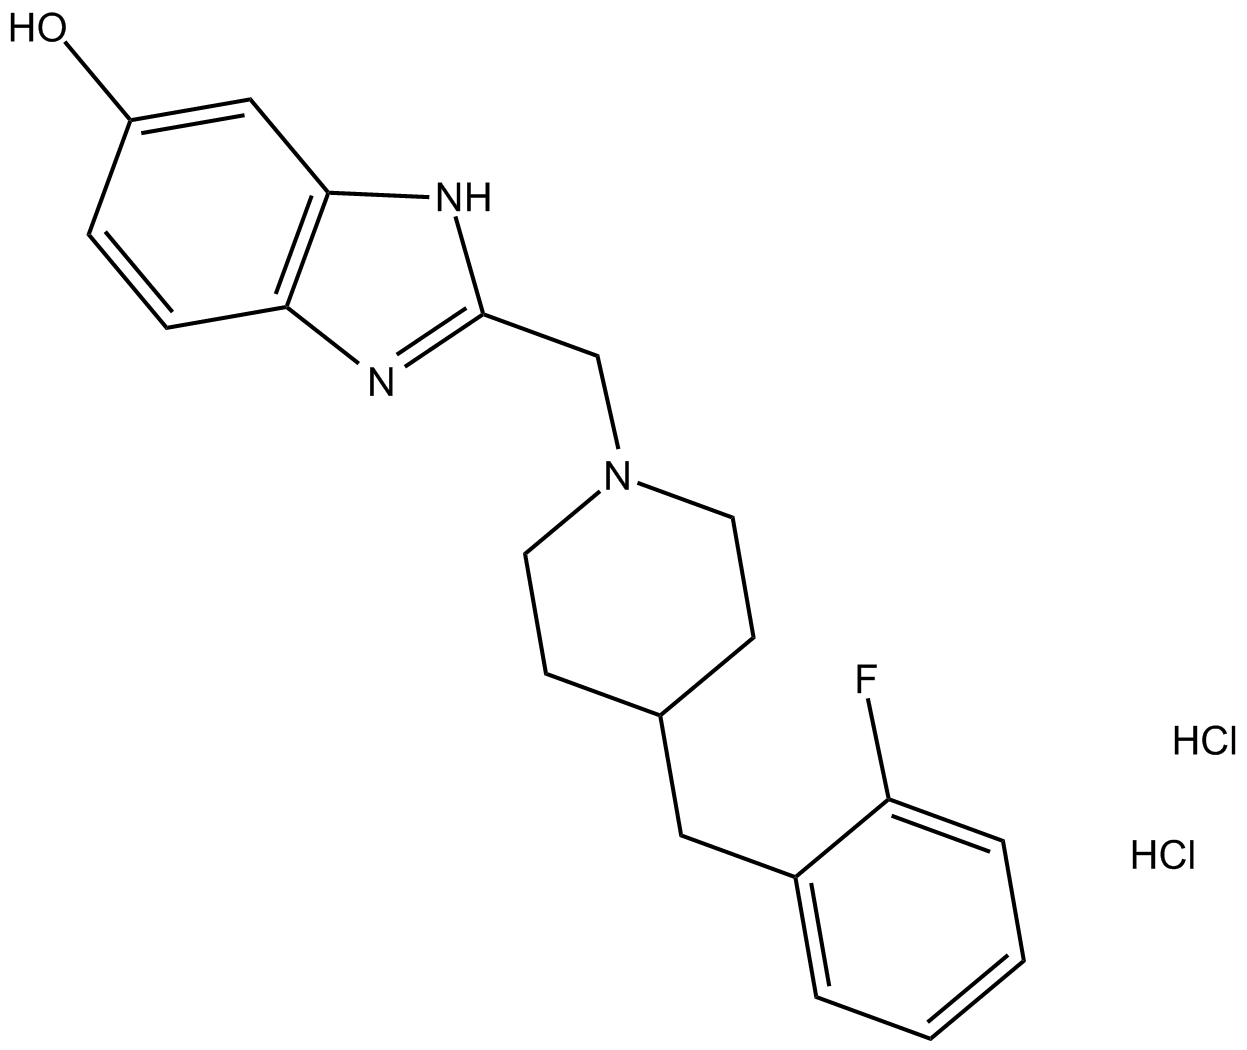 TCN 237 dihydrochloride